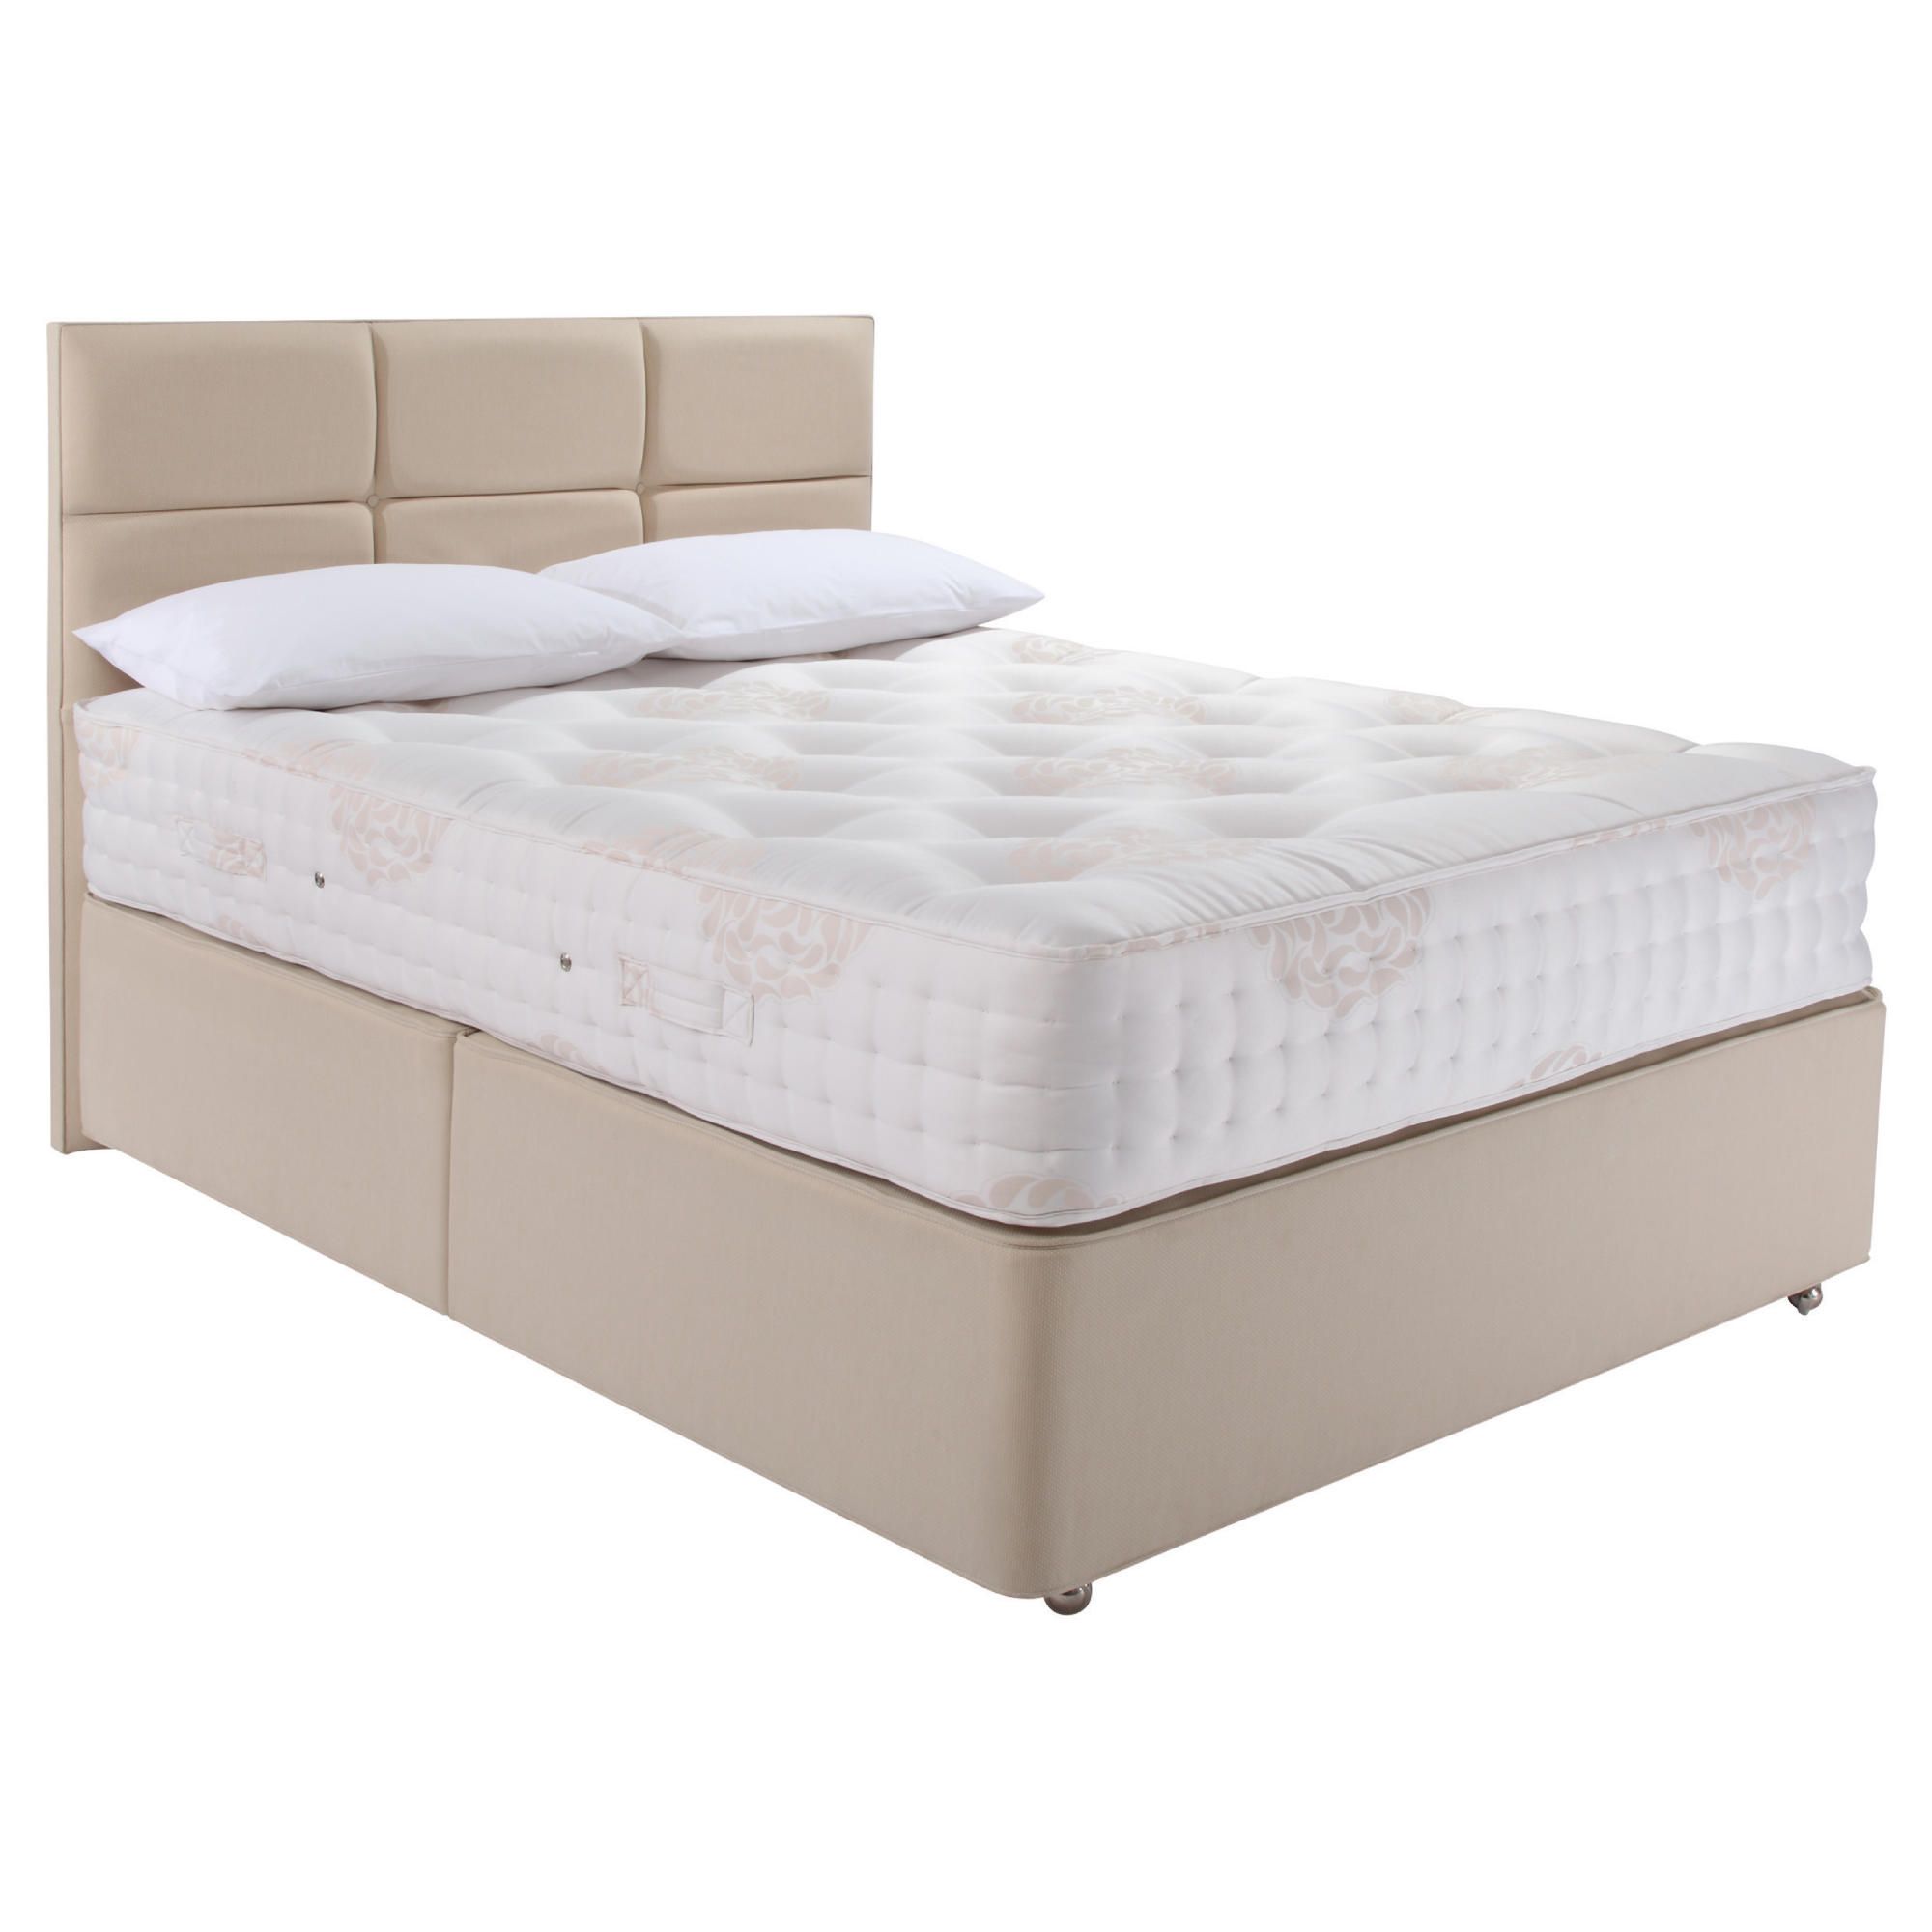 Relyon Luxury 1500 Non Storage Divan Bed King at Tesco Direct